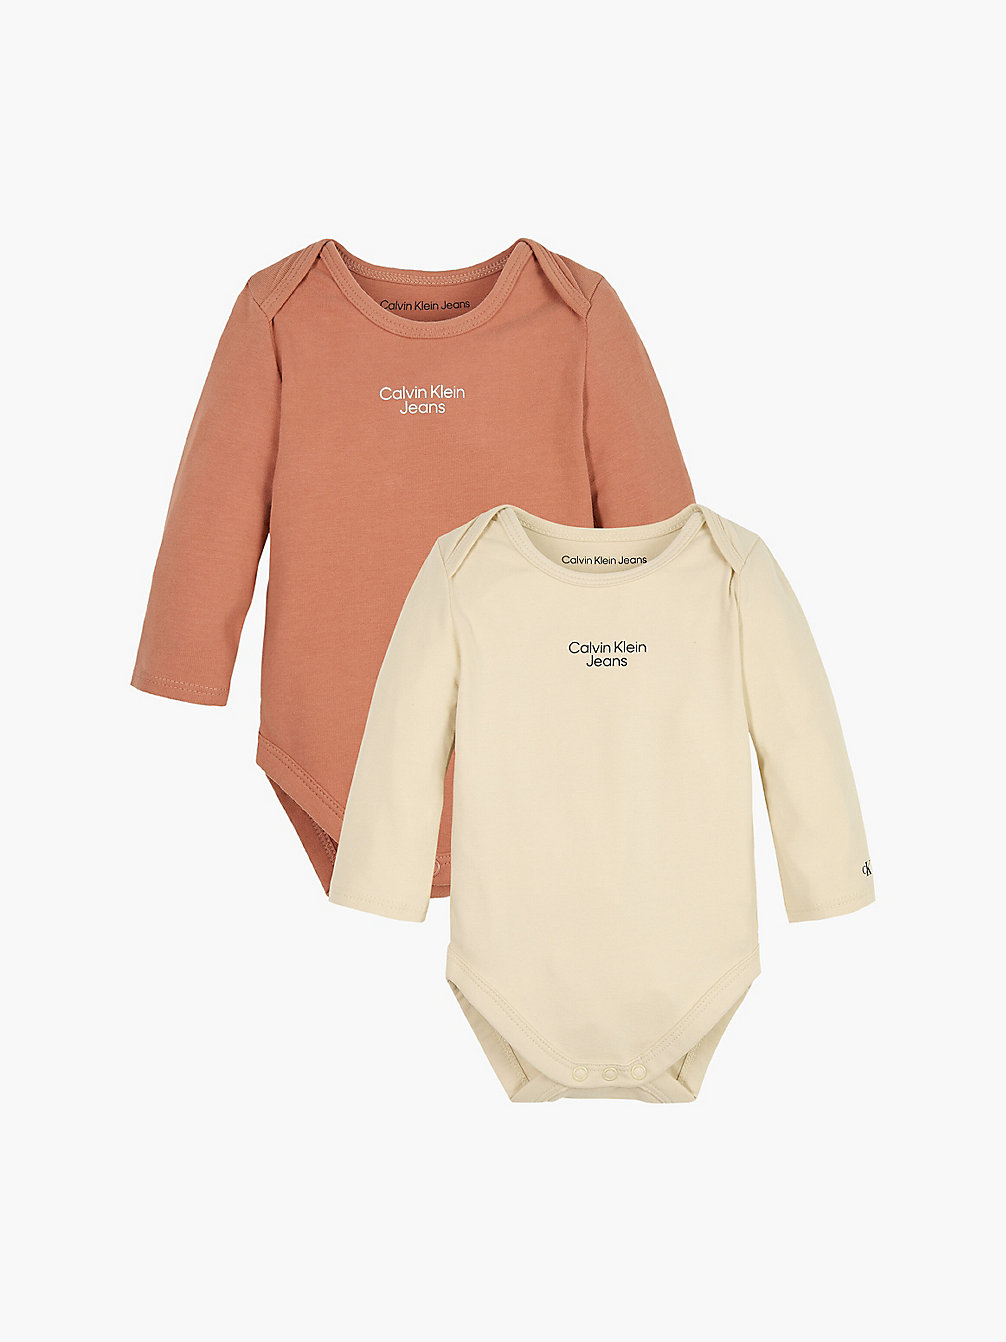 MUSLIN/COPPER REEF 2-Pack Newborn Bodysuit undefined newborn Calvin Klein